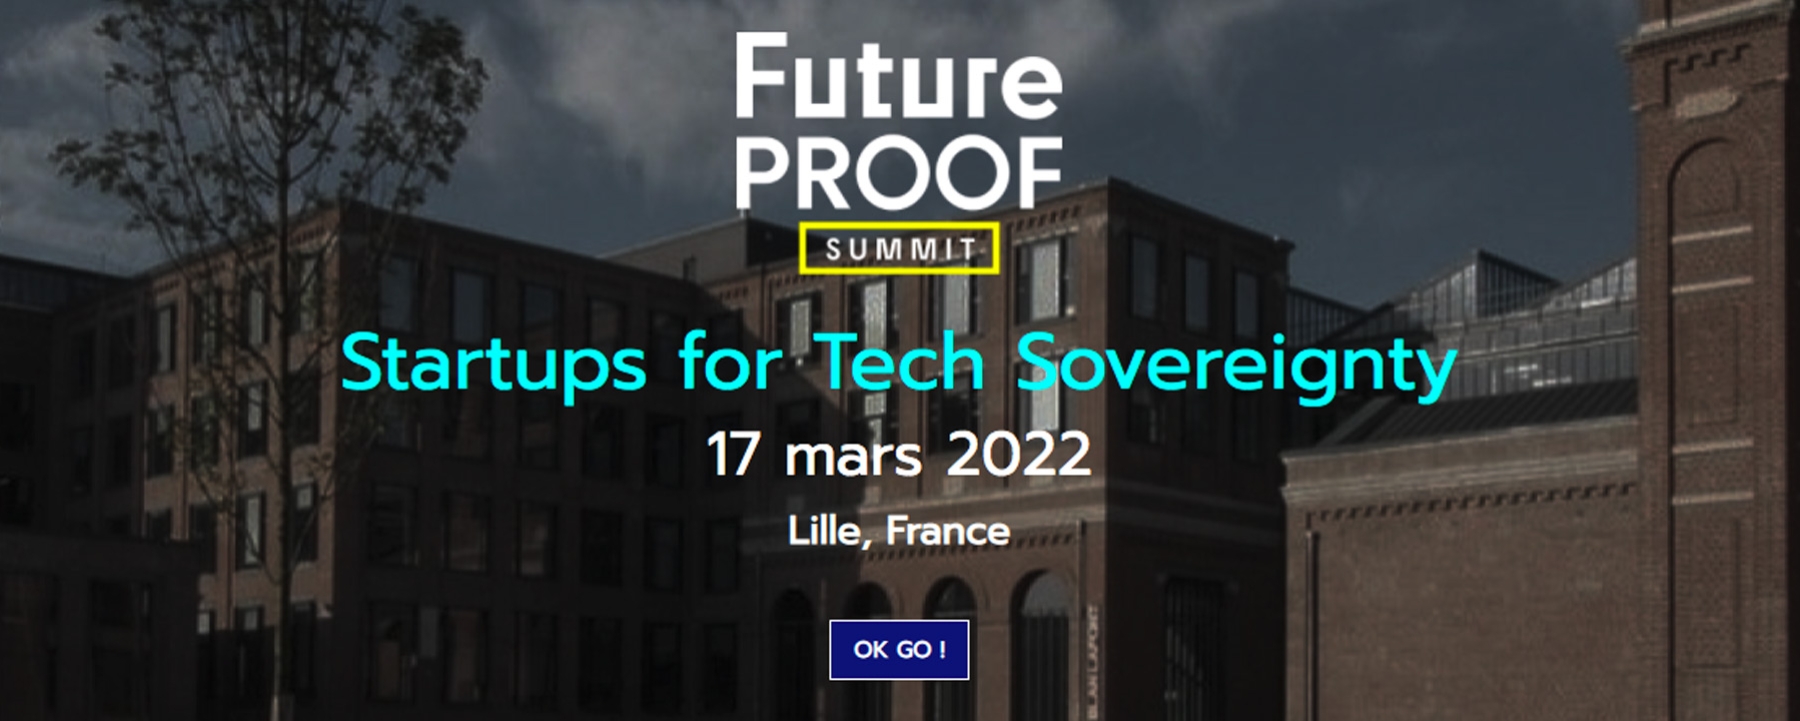 Future Proof Summit